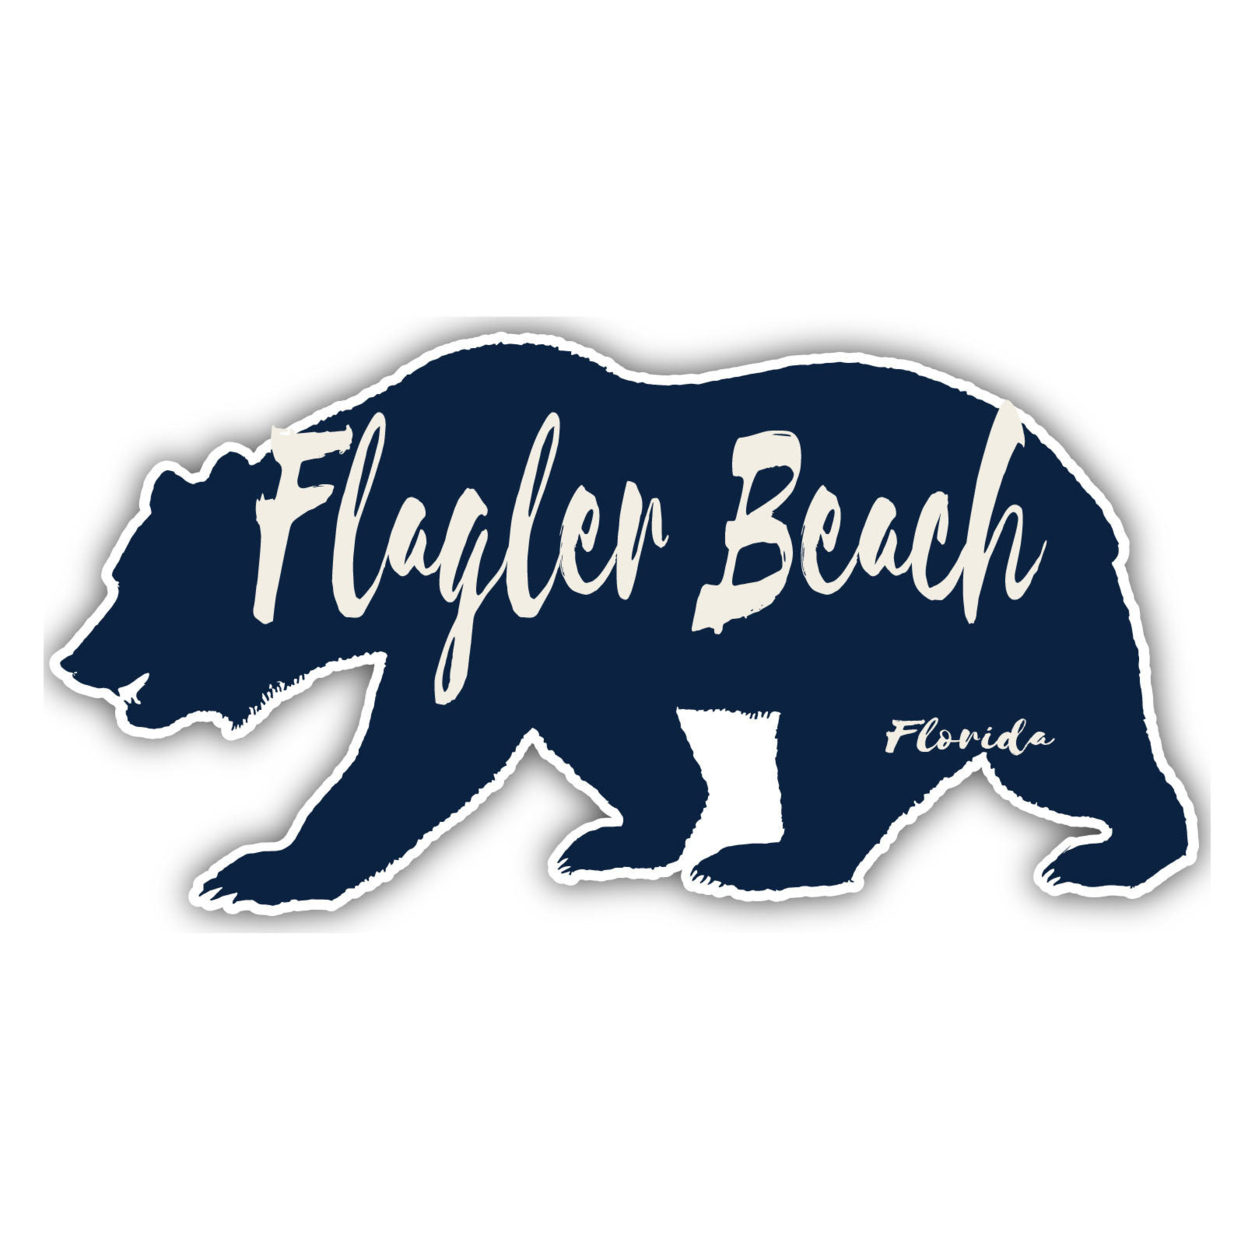 Flagler Beach Florida Souvenir Decorative Stickers (Choose Theme And Size) - Single Unit, 4-Inch, Bear